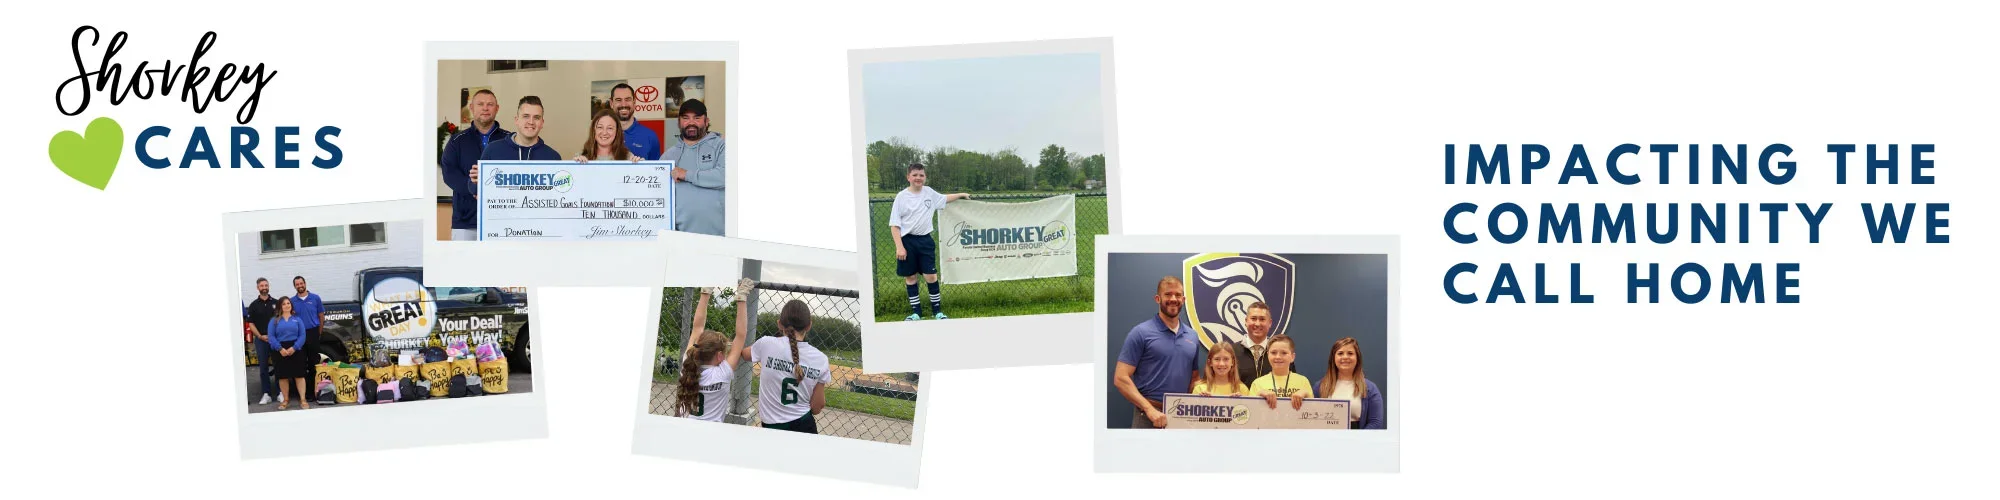 shorekey keys group photos collage - impacting the community we call home